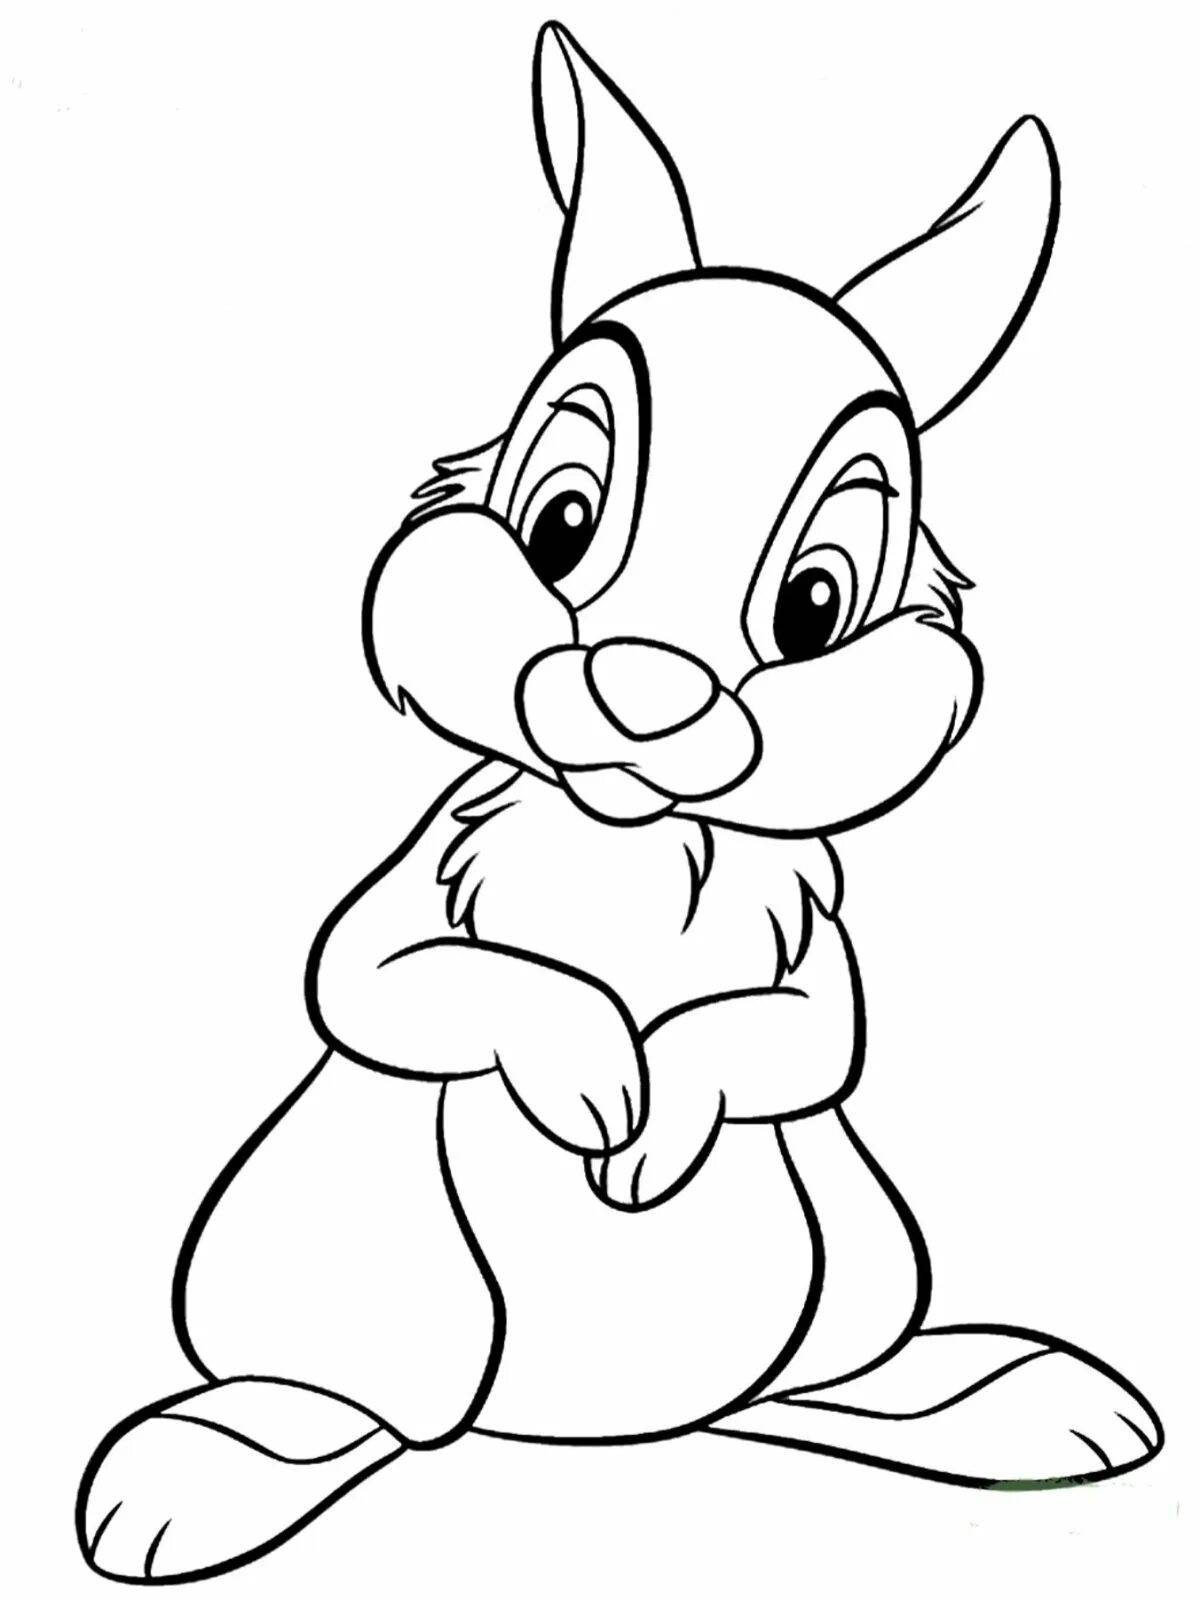 Coloring book energetic cartoon hare